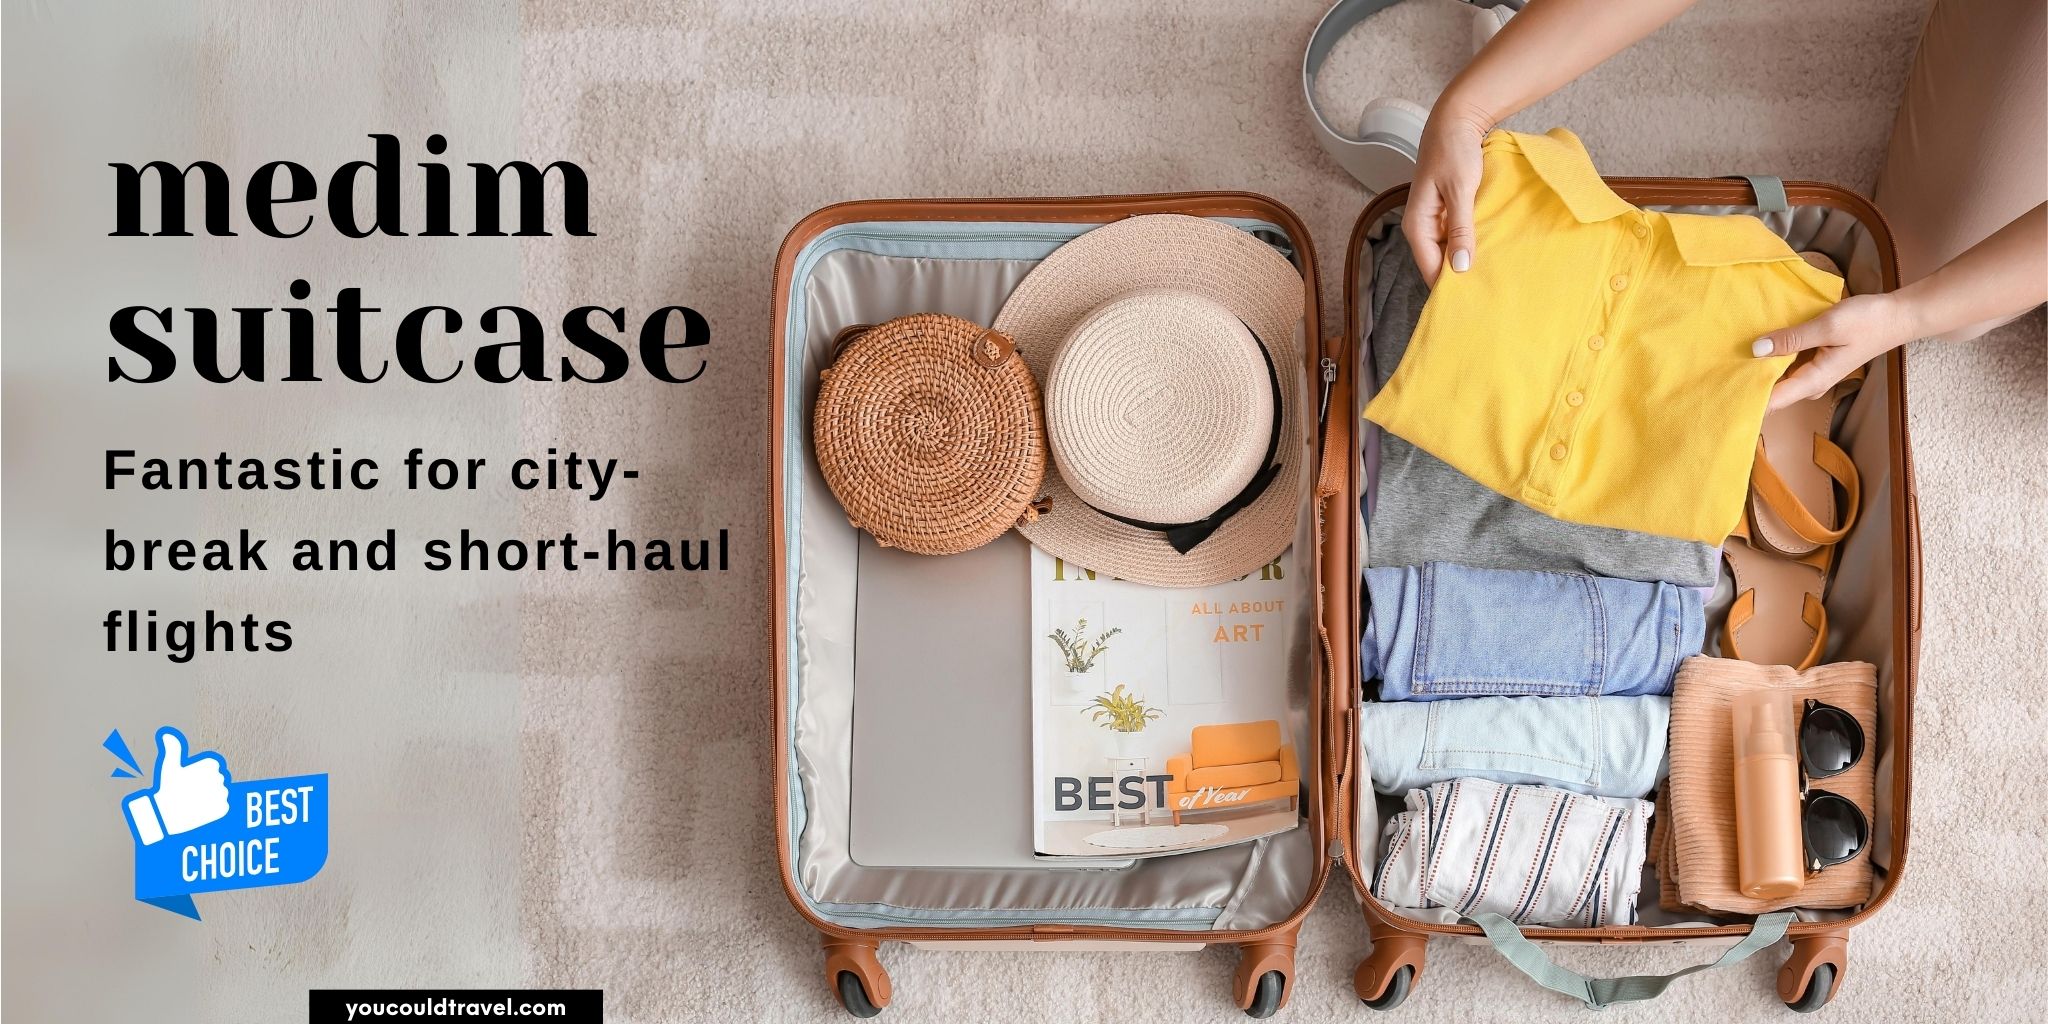 Medium suitcase for city breaks and short haul flights